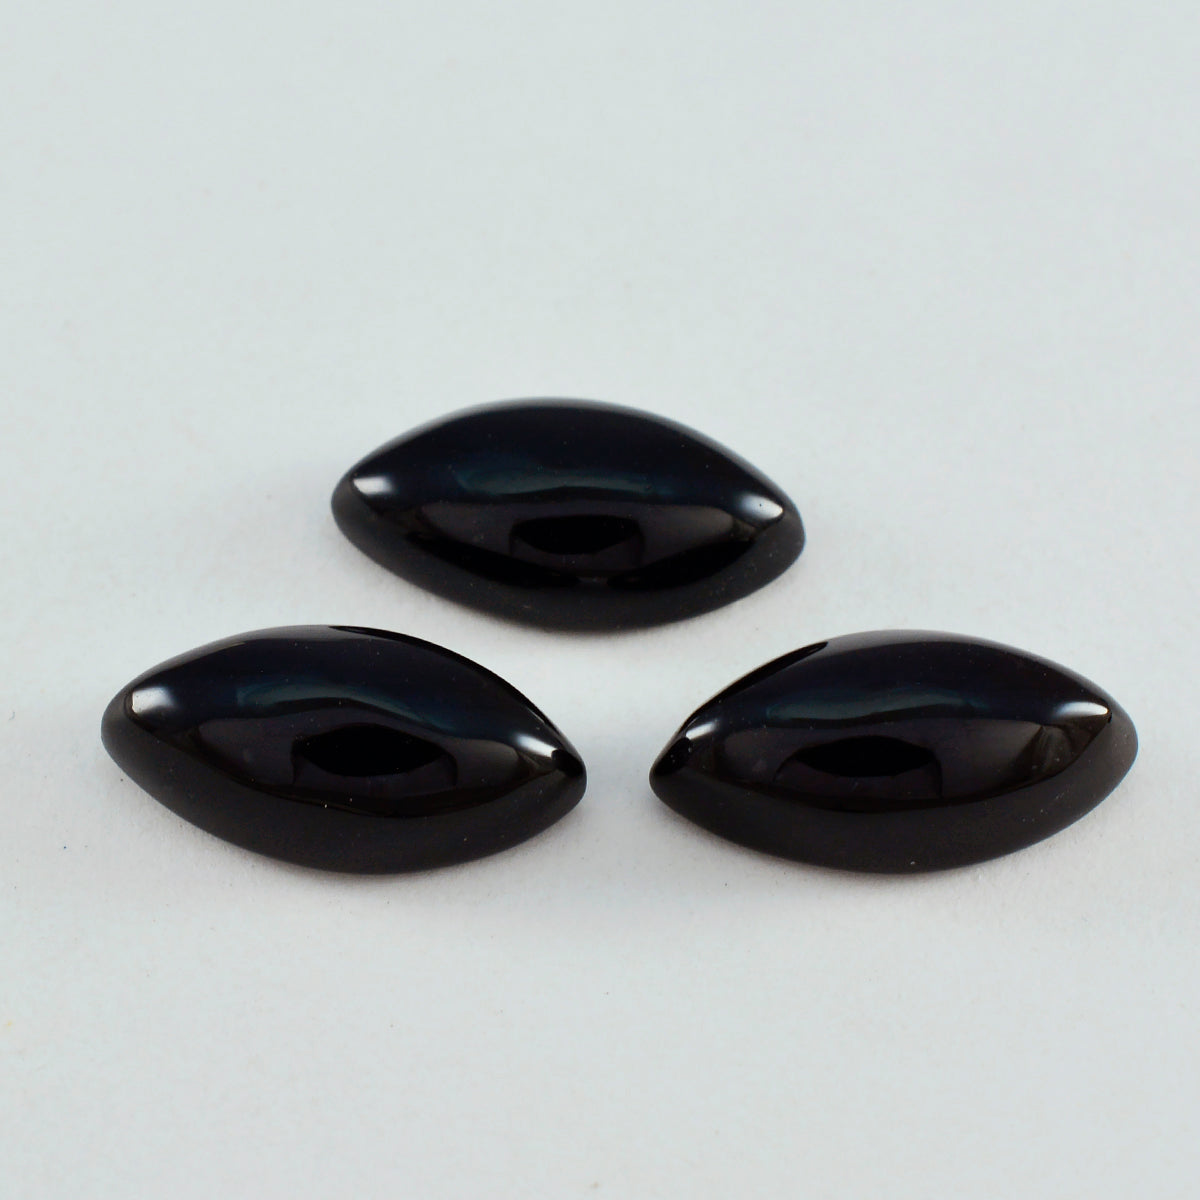 Riyogems 1PC Black Onyx Cabochon 10x20 mm Marquise Shape attractive Quality Loose Stone